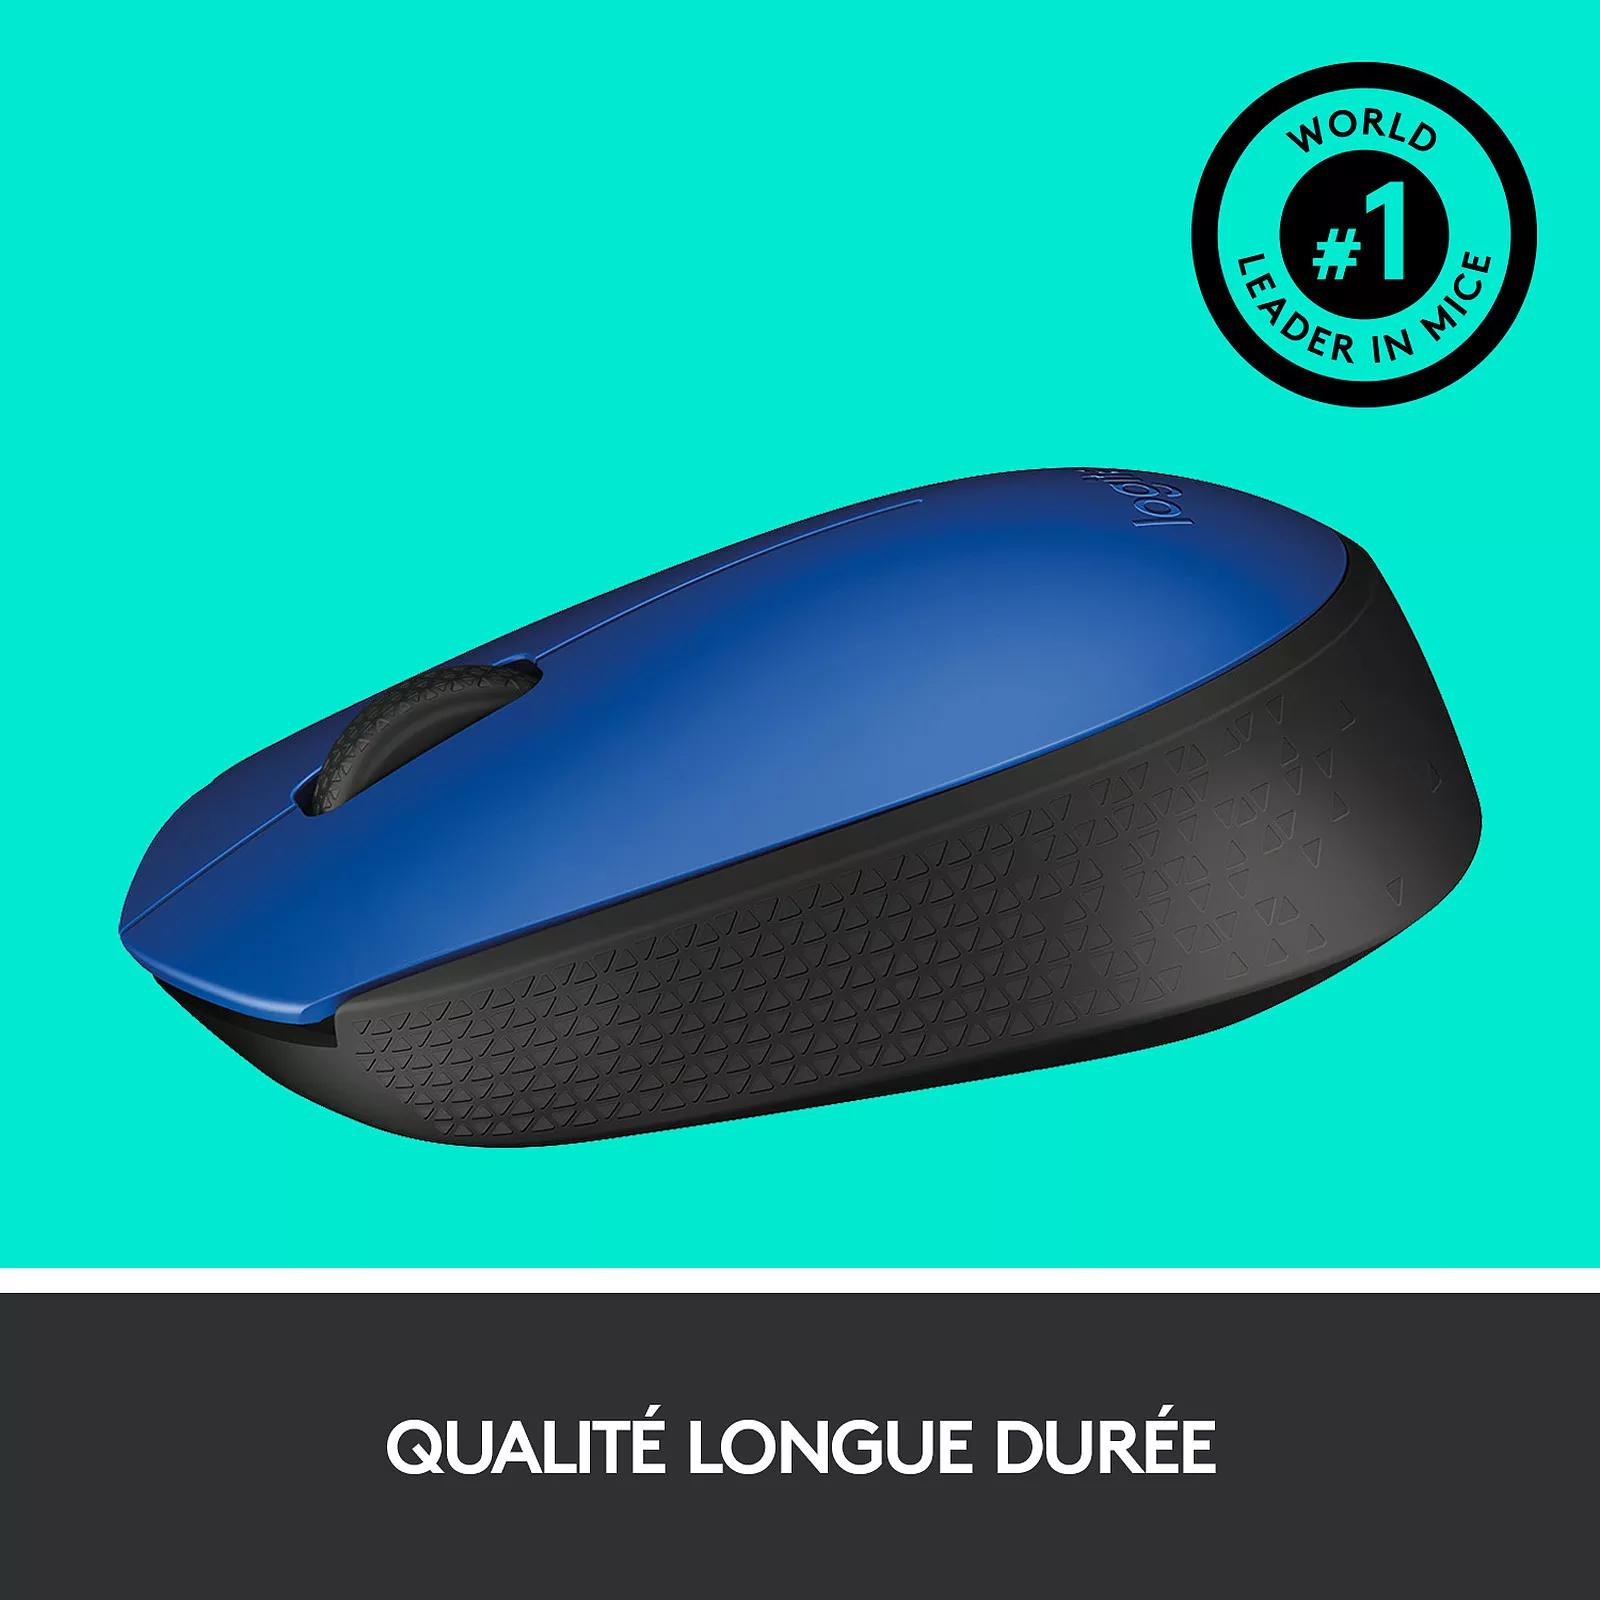 Logitech M171 Wireless Mouse (Bleu)